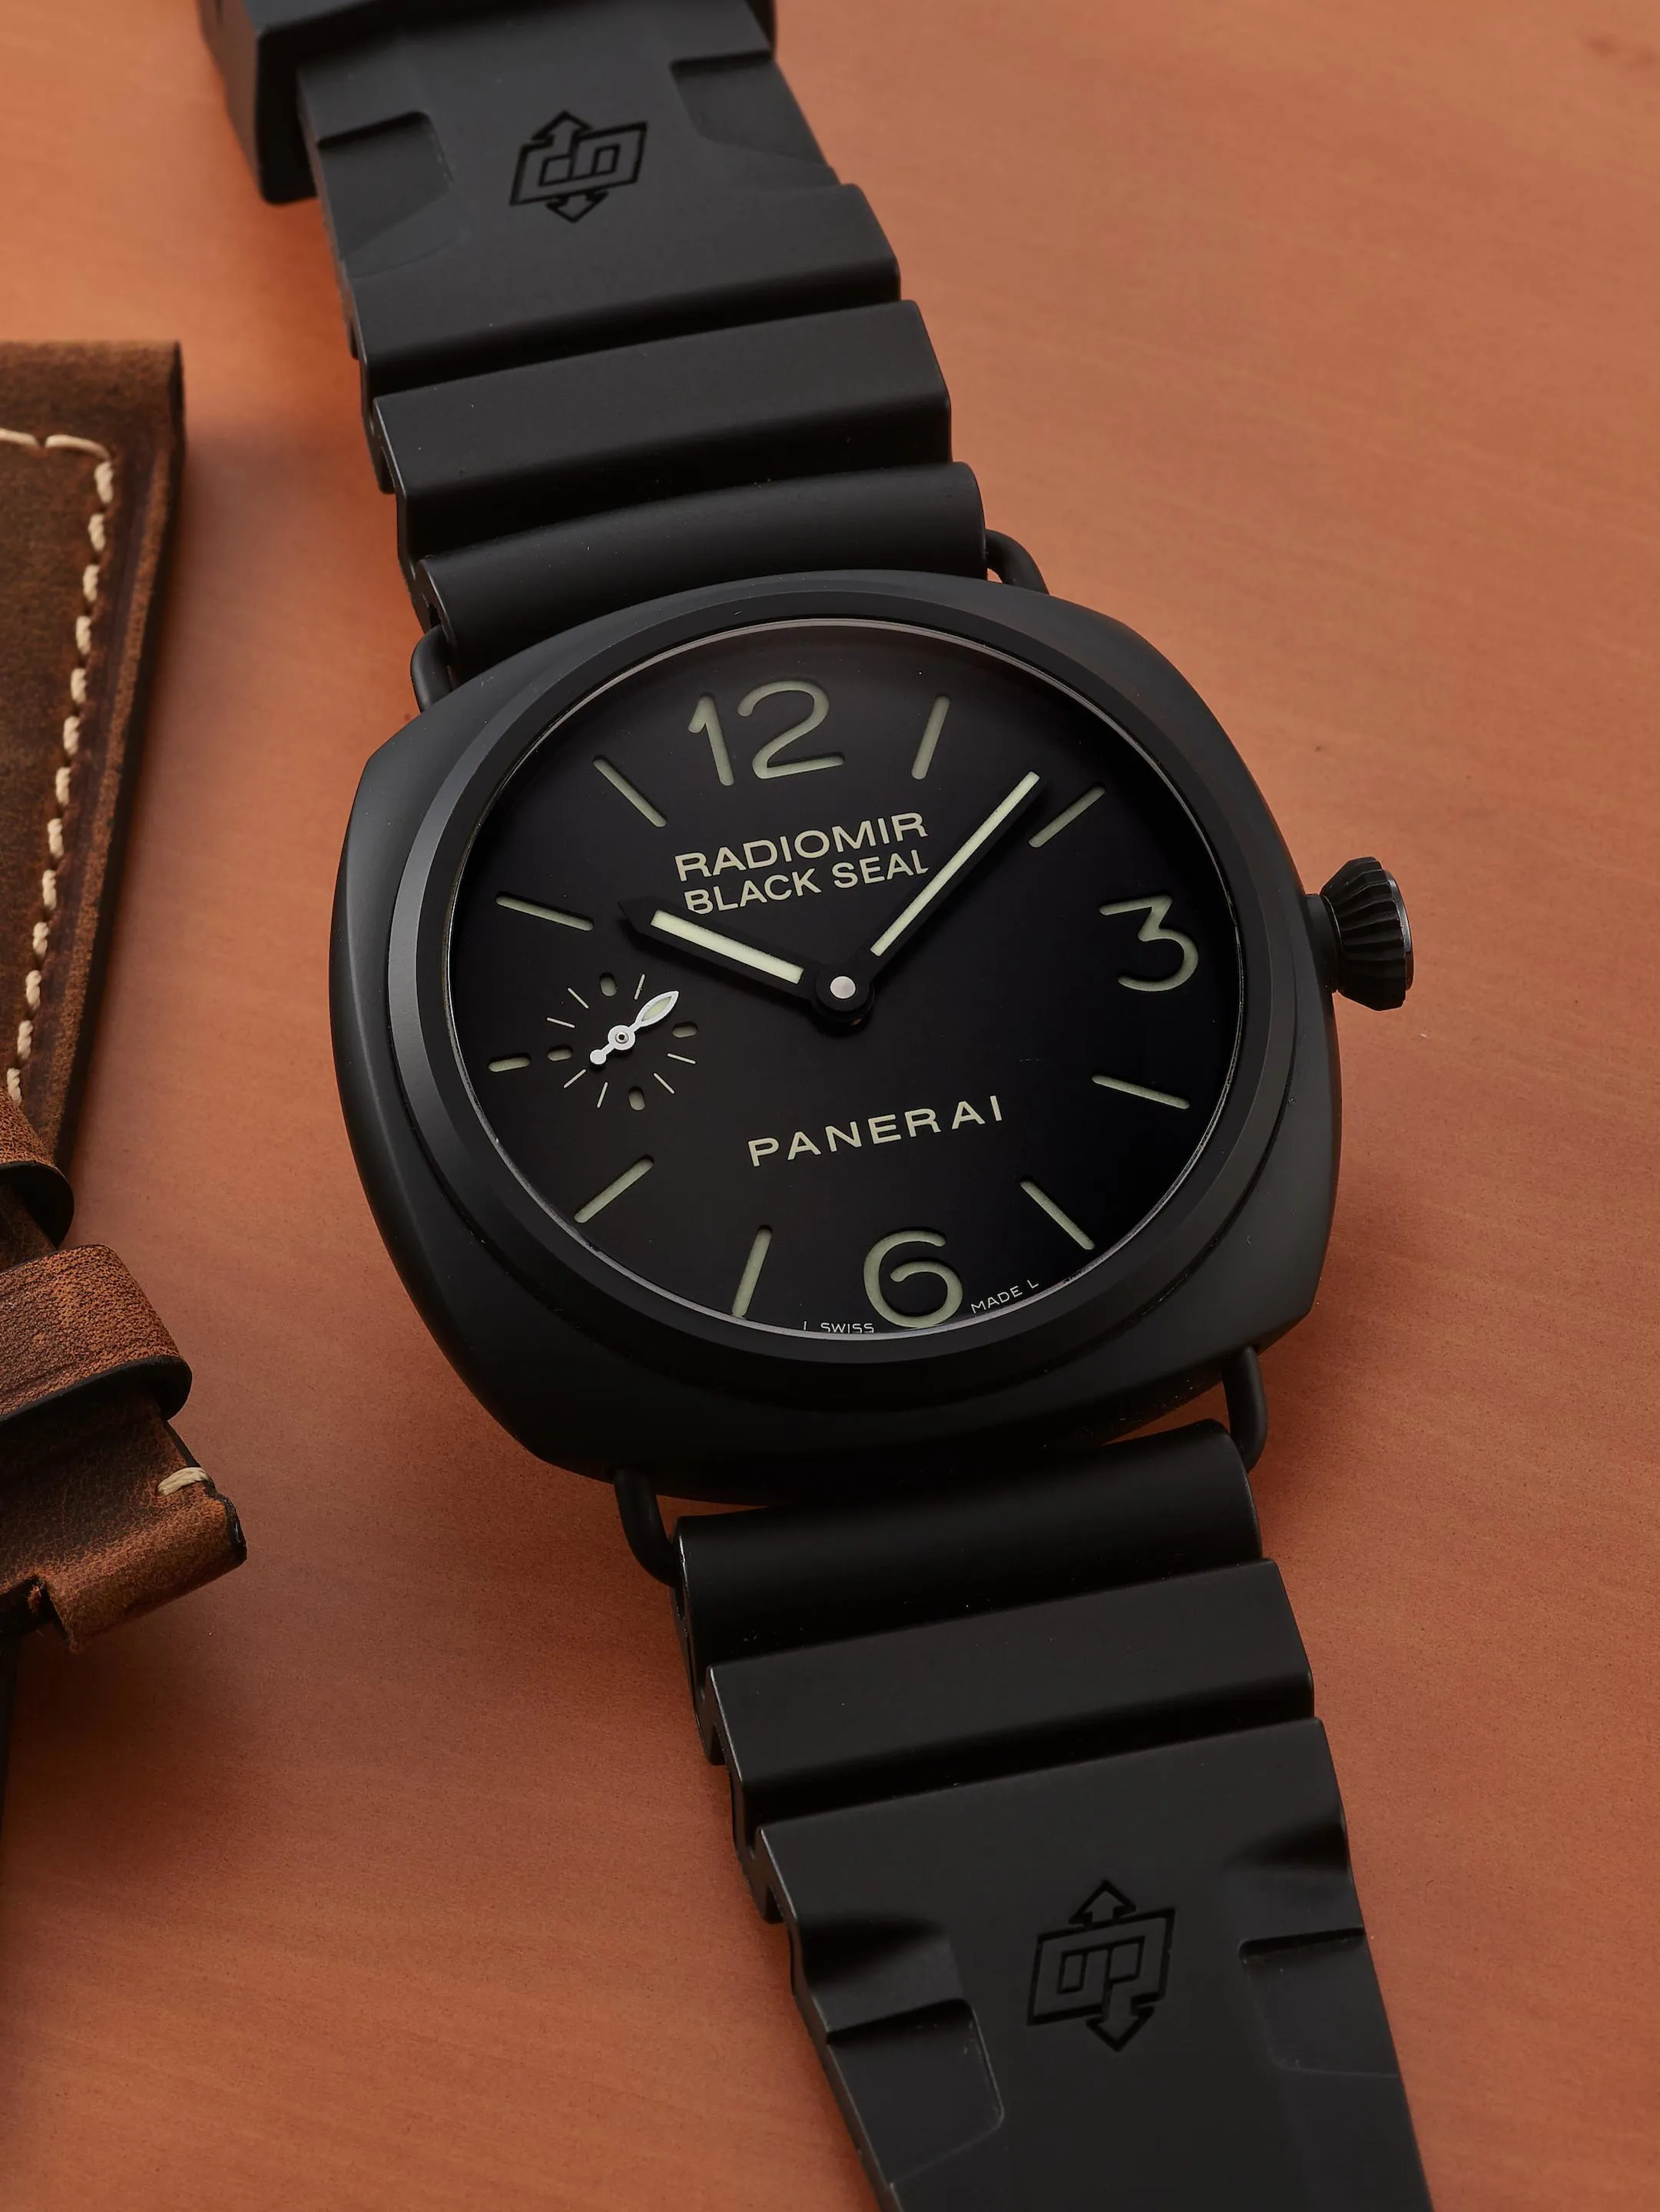 Panerai Radiomir Black Seal PAM 00292 45mm Ceramic and Stainless Steel Black